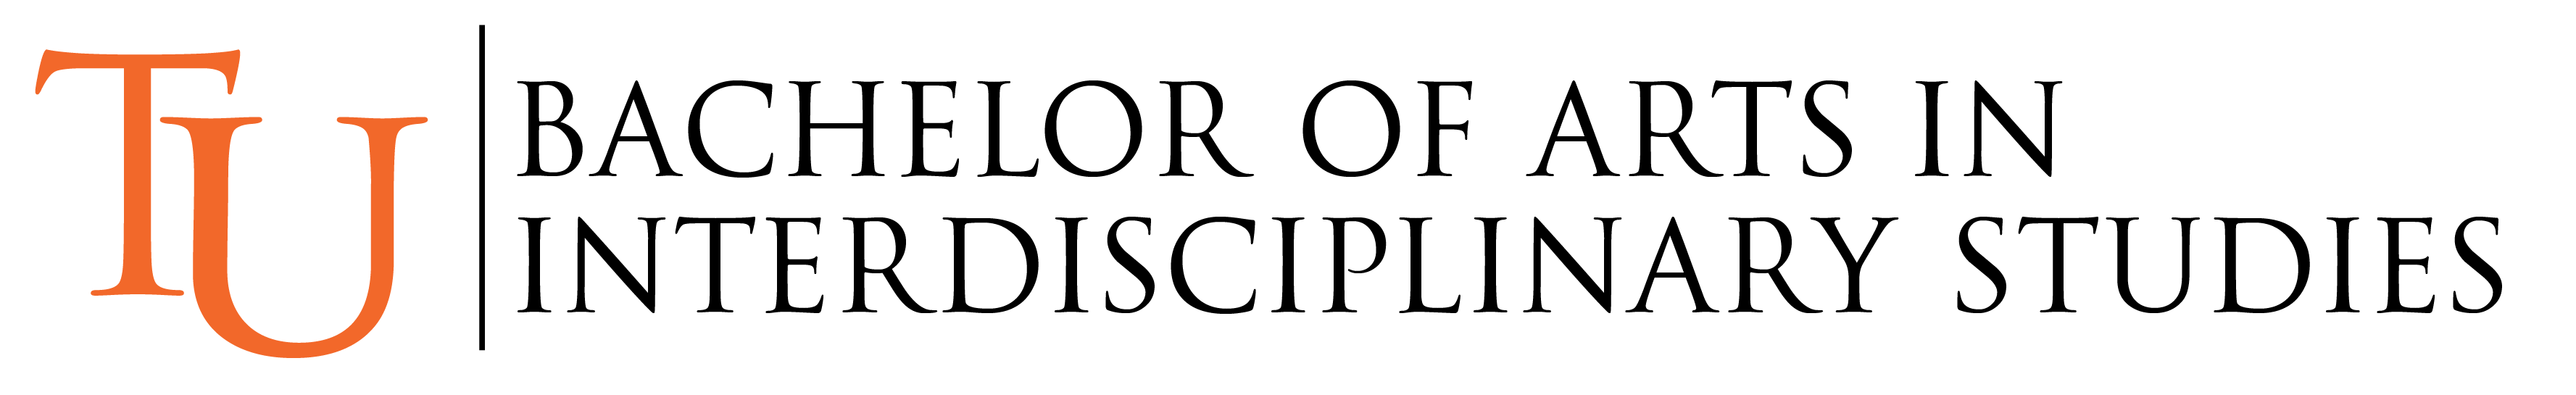 Bachelor of Arts in Interdisciplinary Studies logo